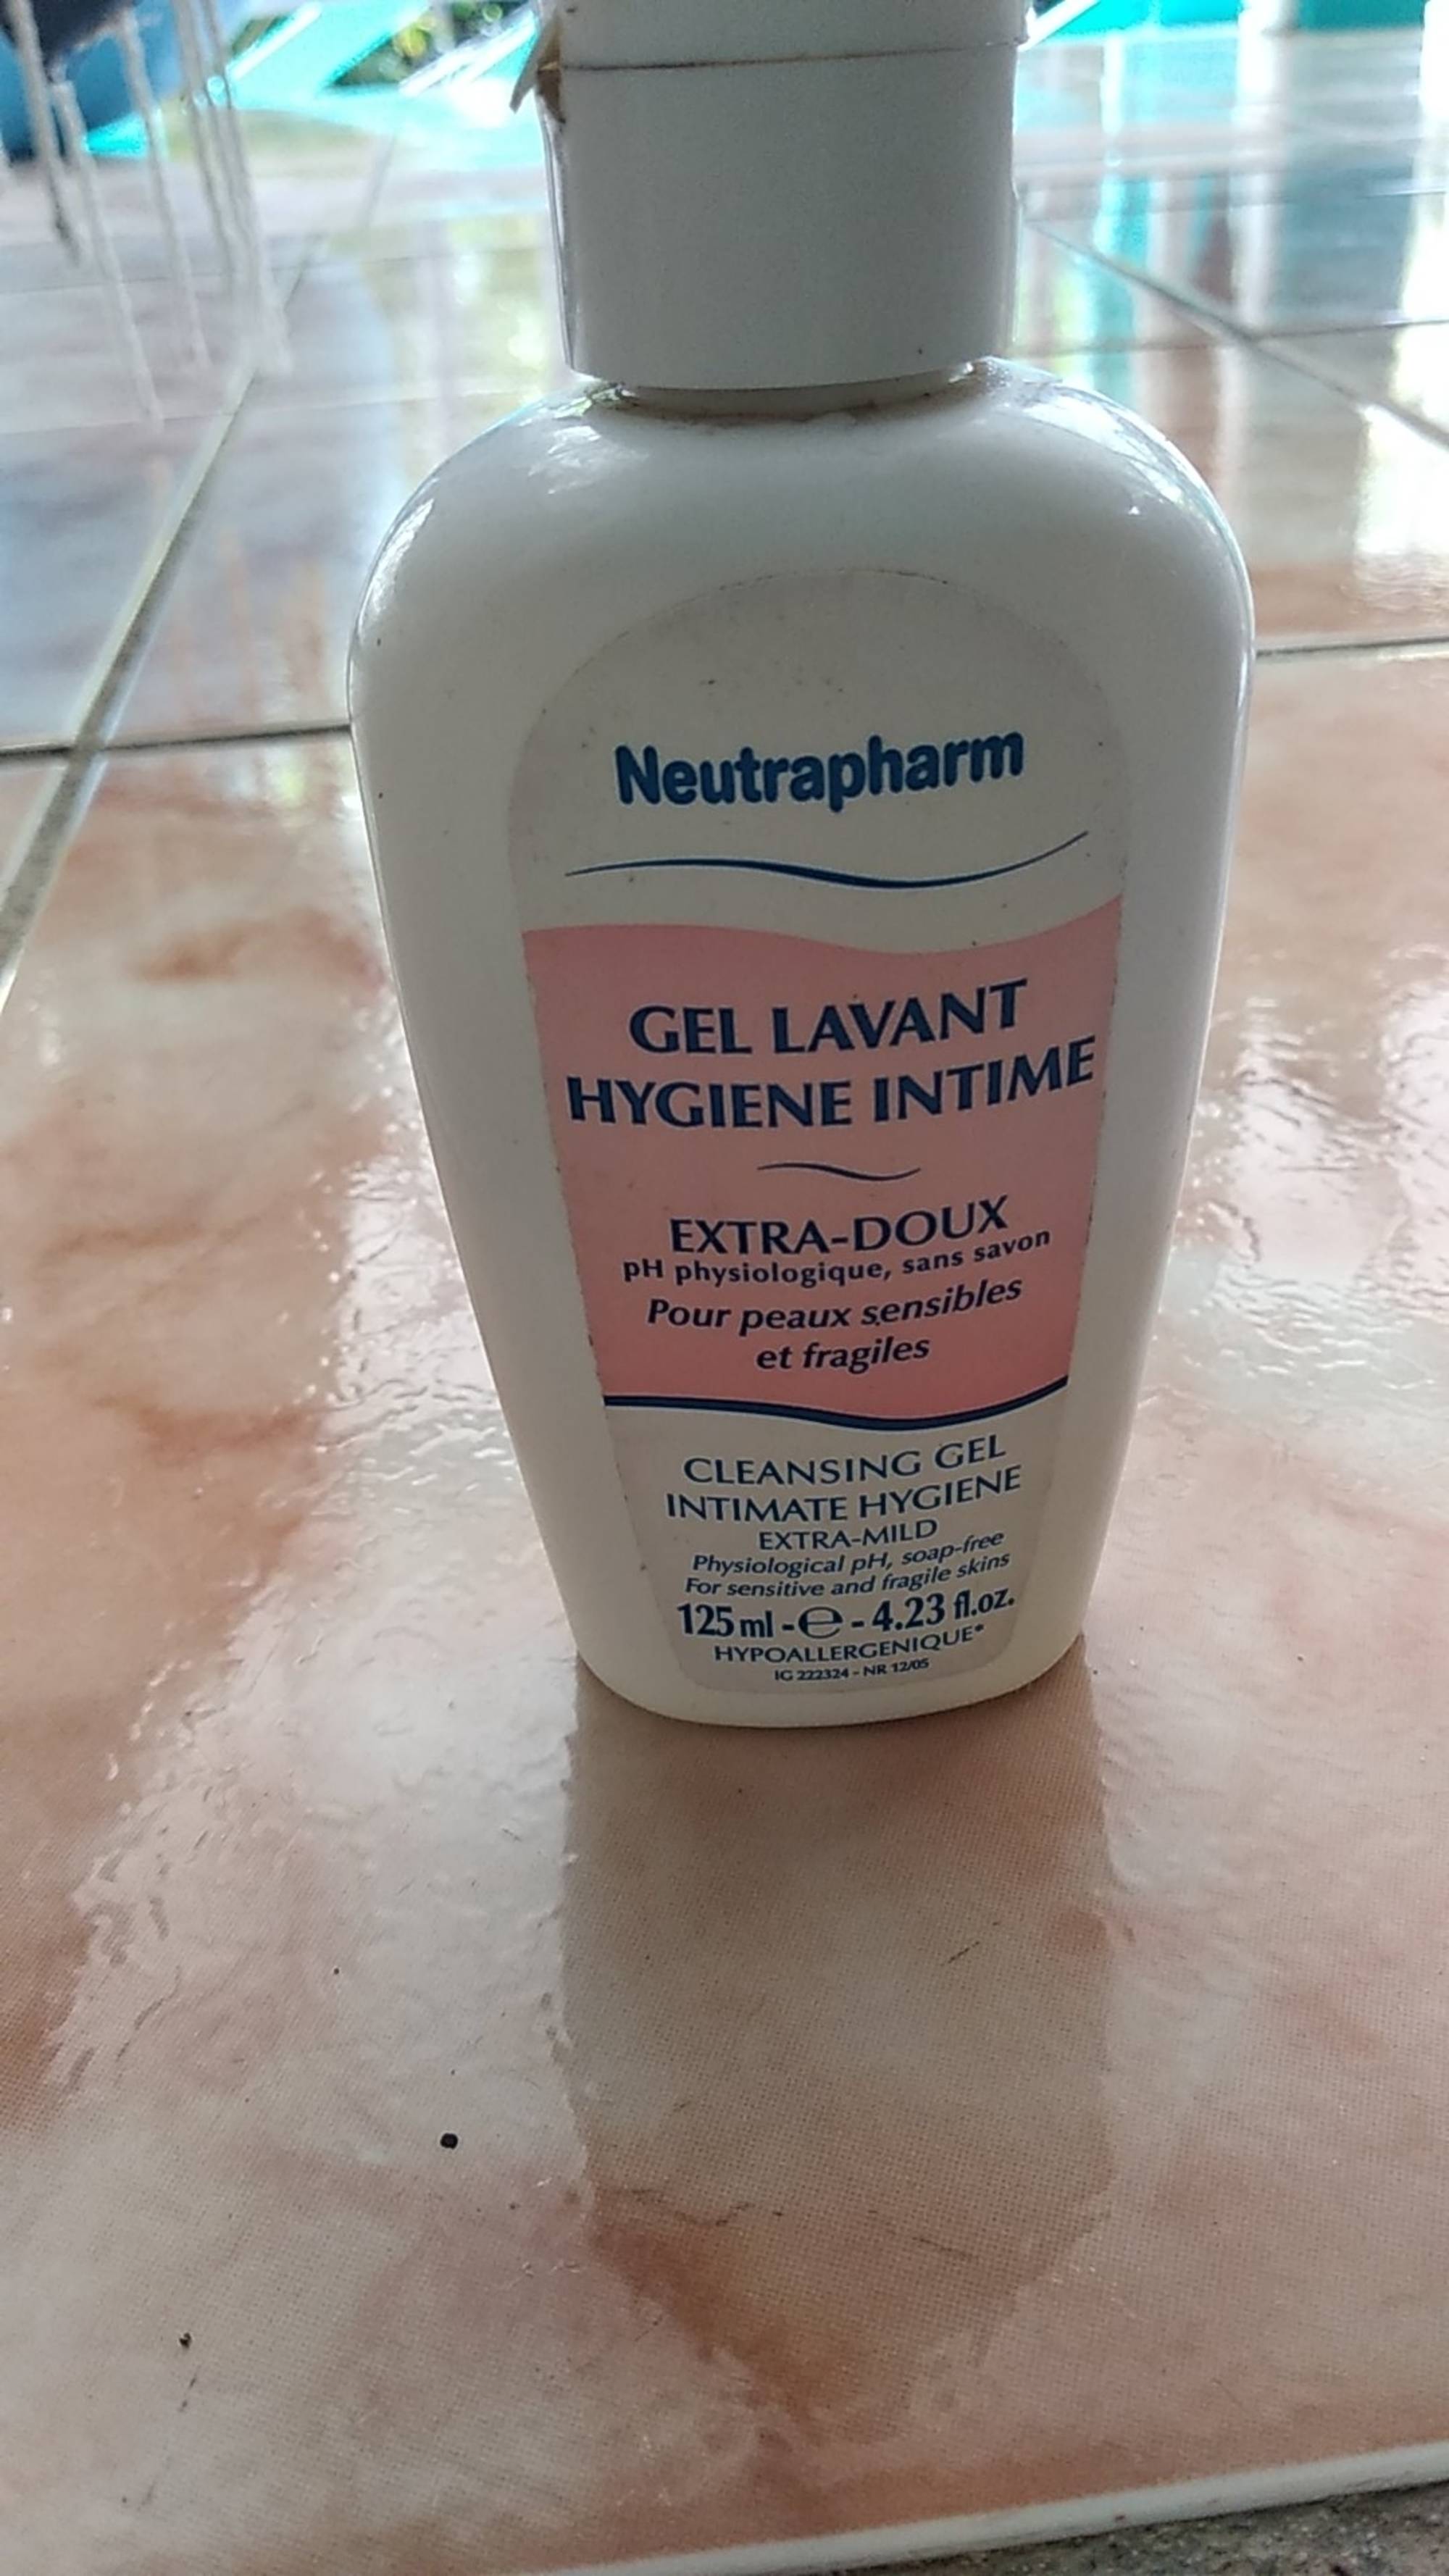 GILBERT - Neutrapharm - Gel lavant hygiene intime extra-doux